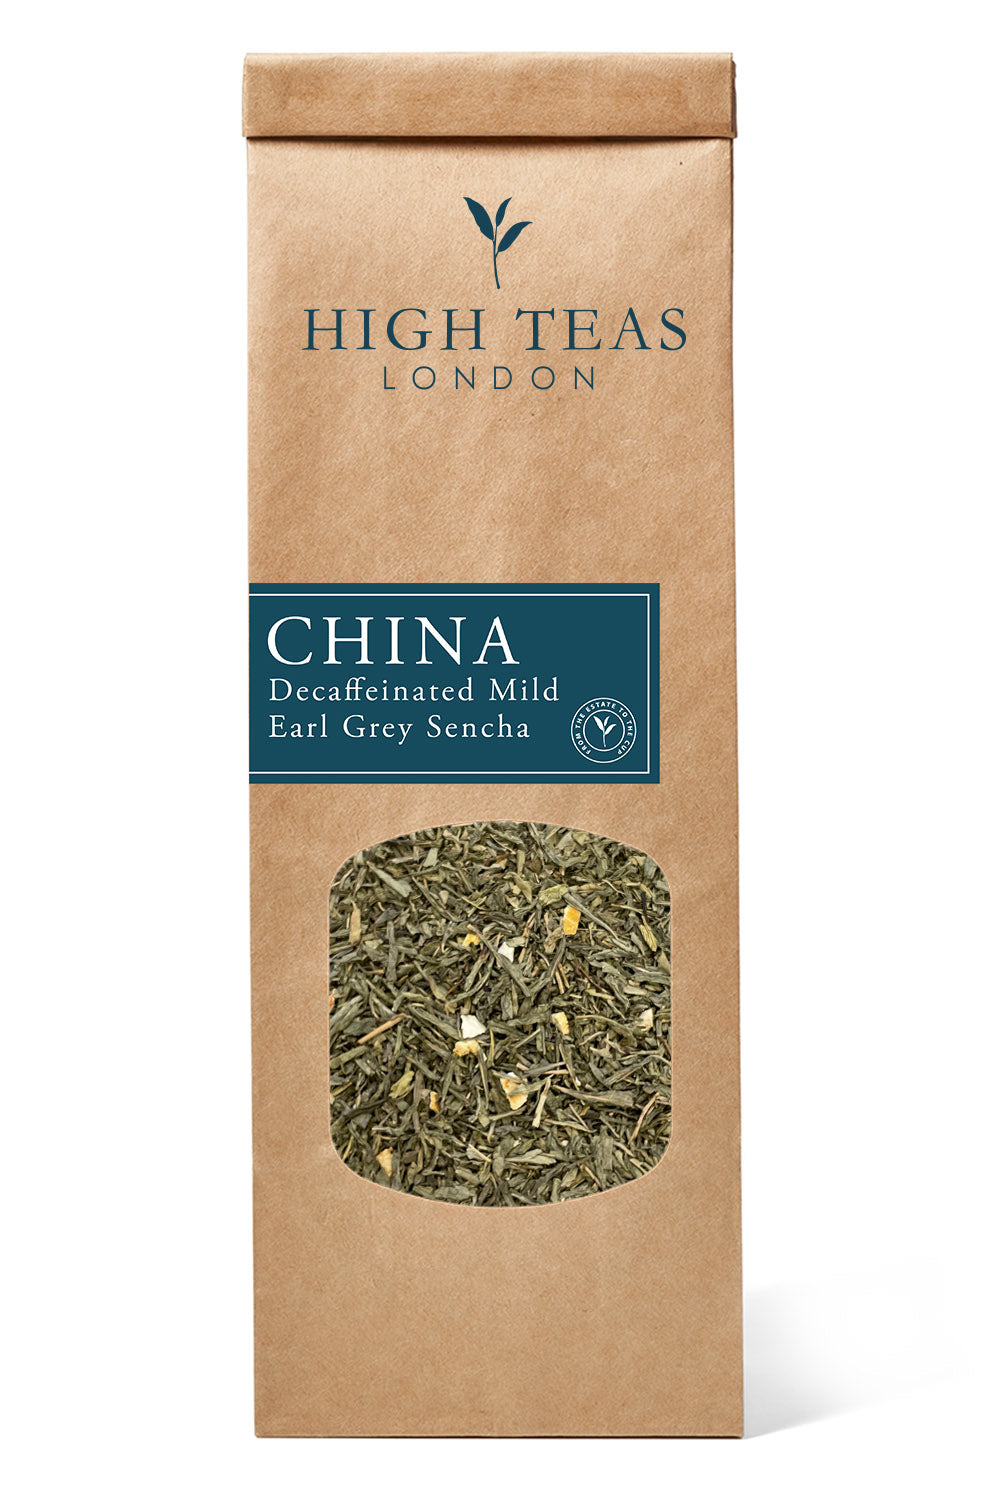 Decaffeinated Mild Earl Grey Sencha-50g-Loose Leaf Tea-High Teas